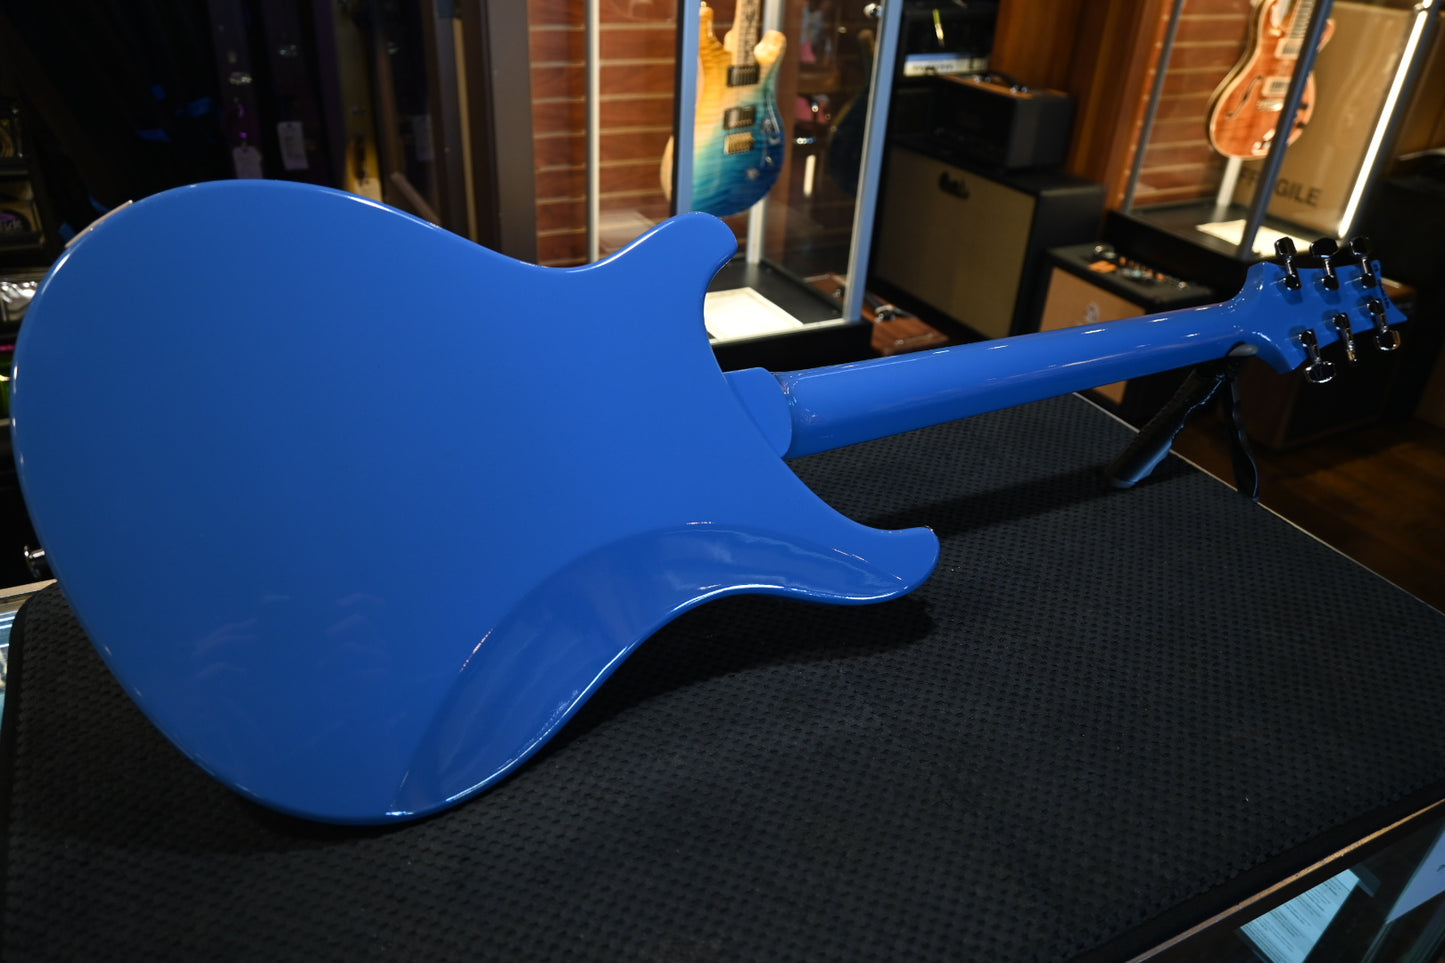 PRS S2 Vela - Mahi Blue Guitar #6330 - Danville Music